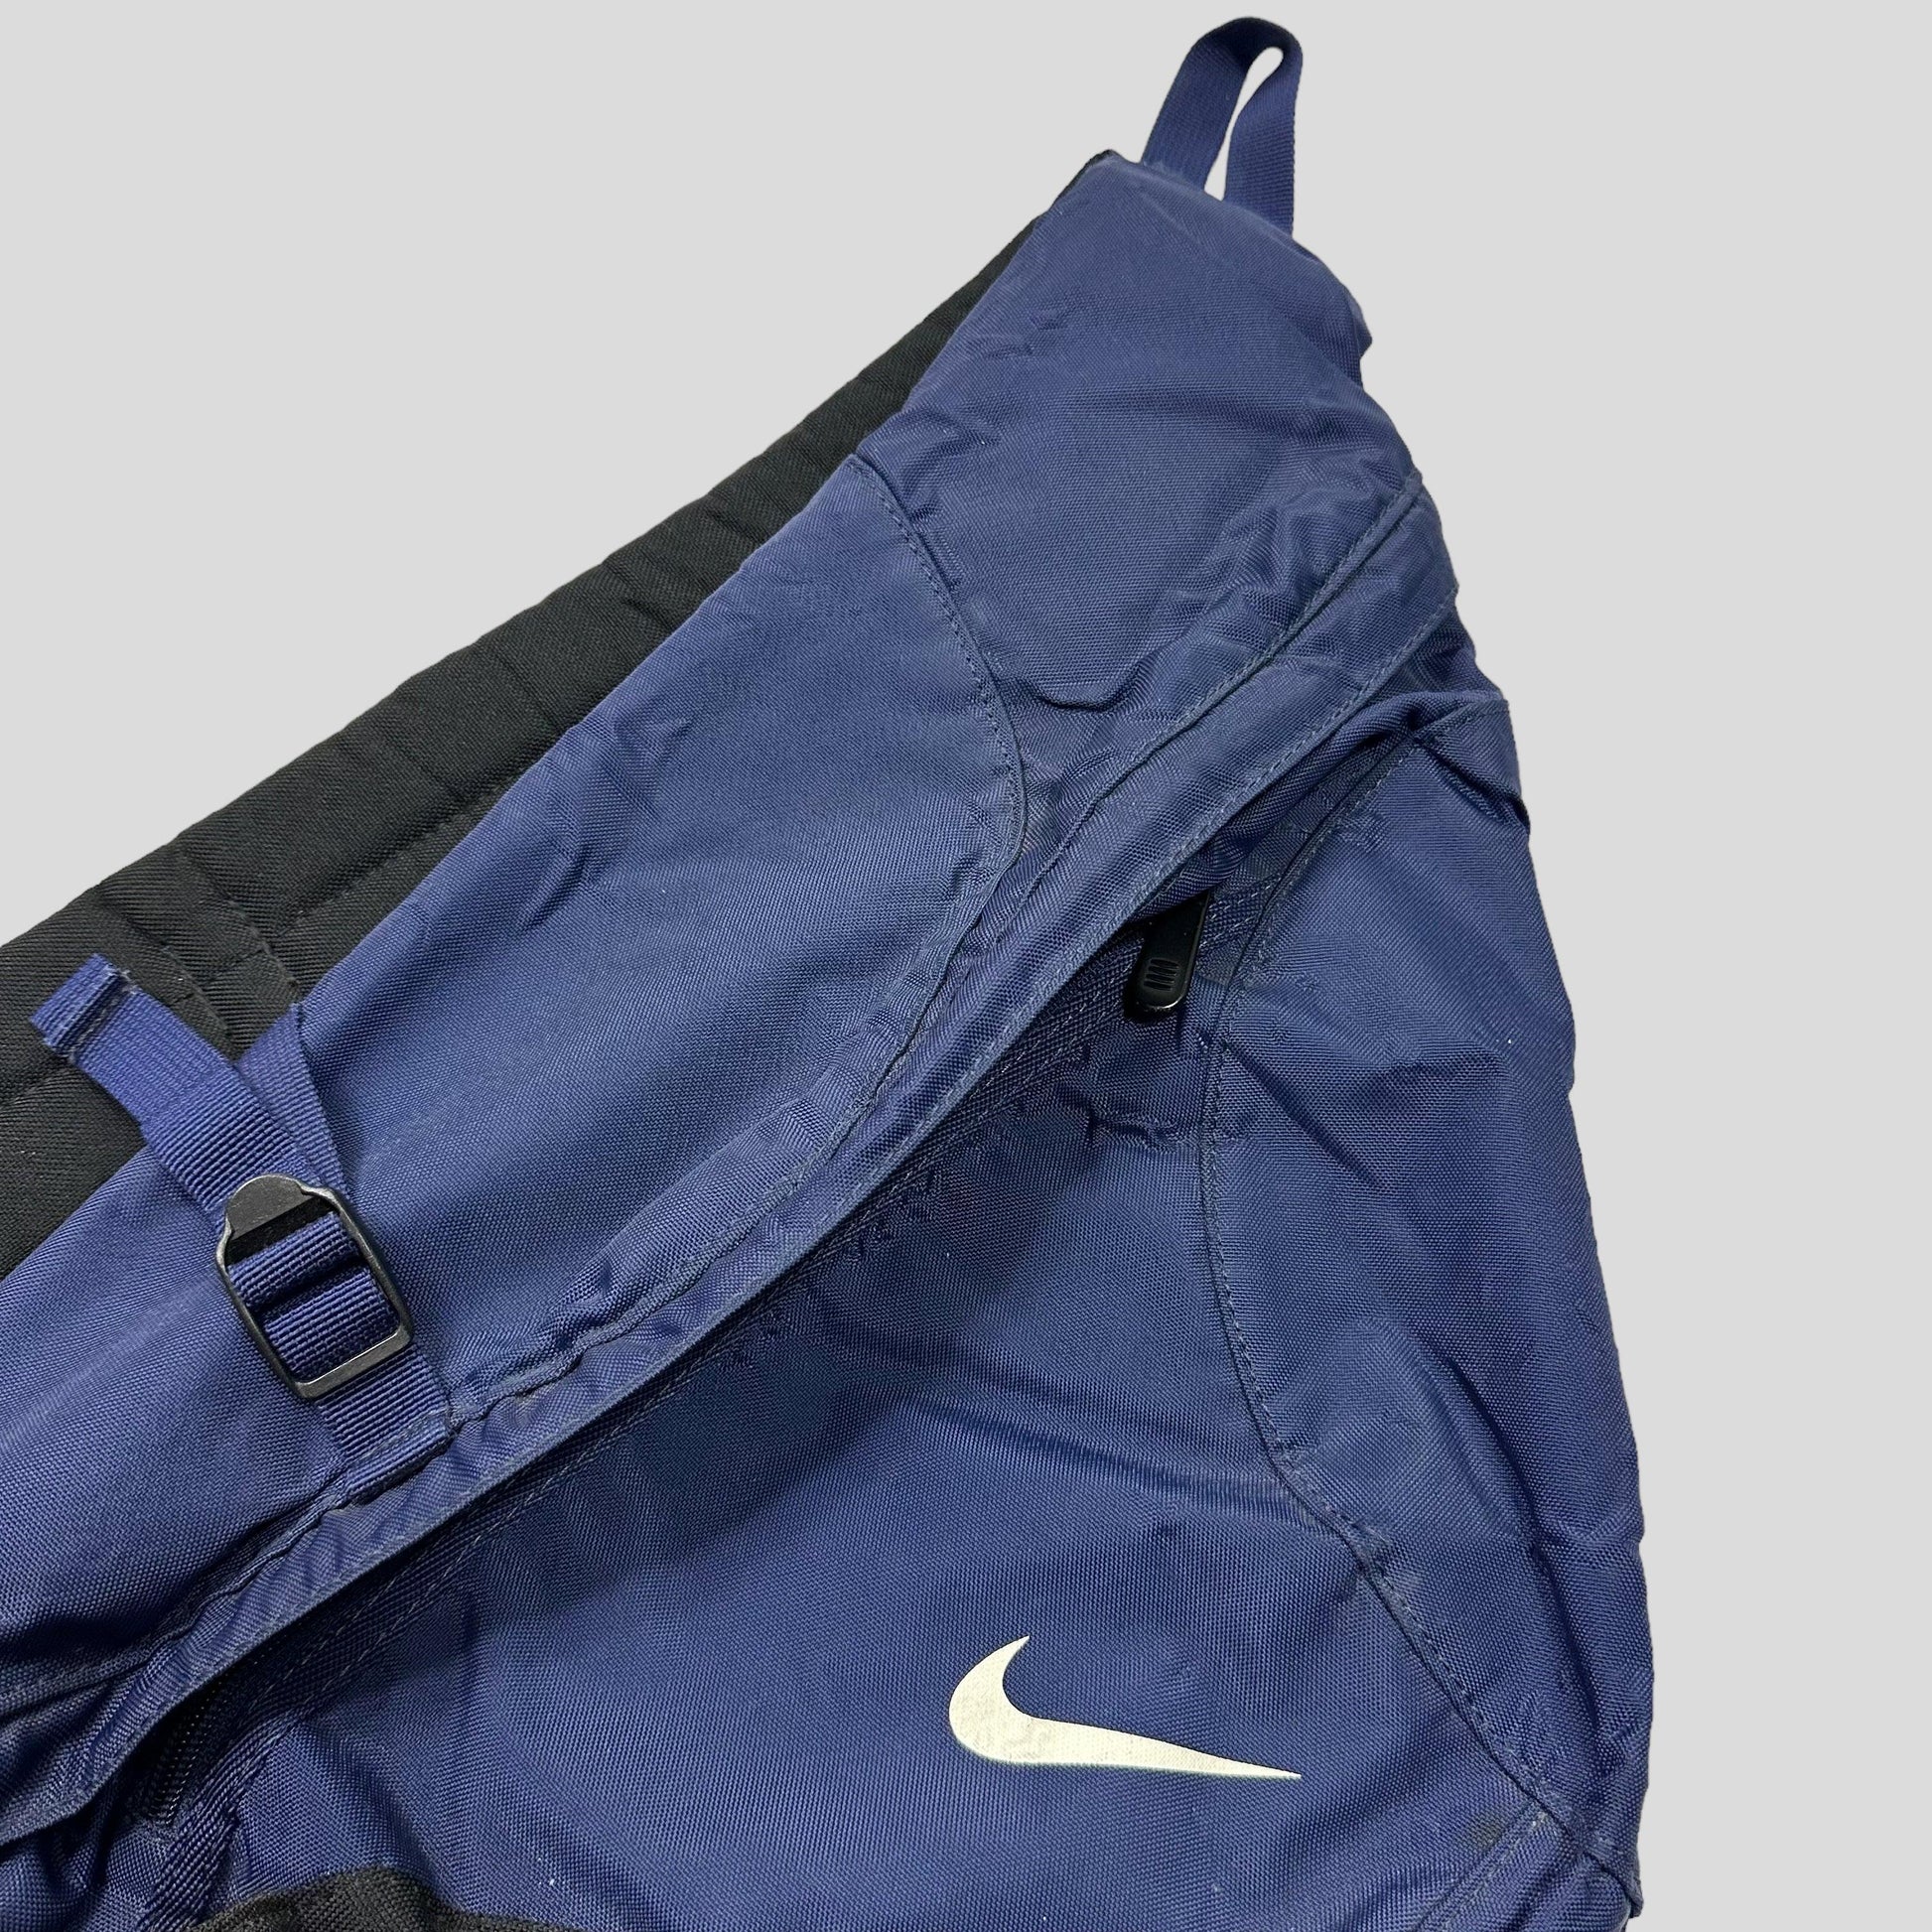 Nike 2002 Tri-harness Sling Bag - Known Source